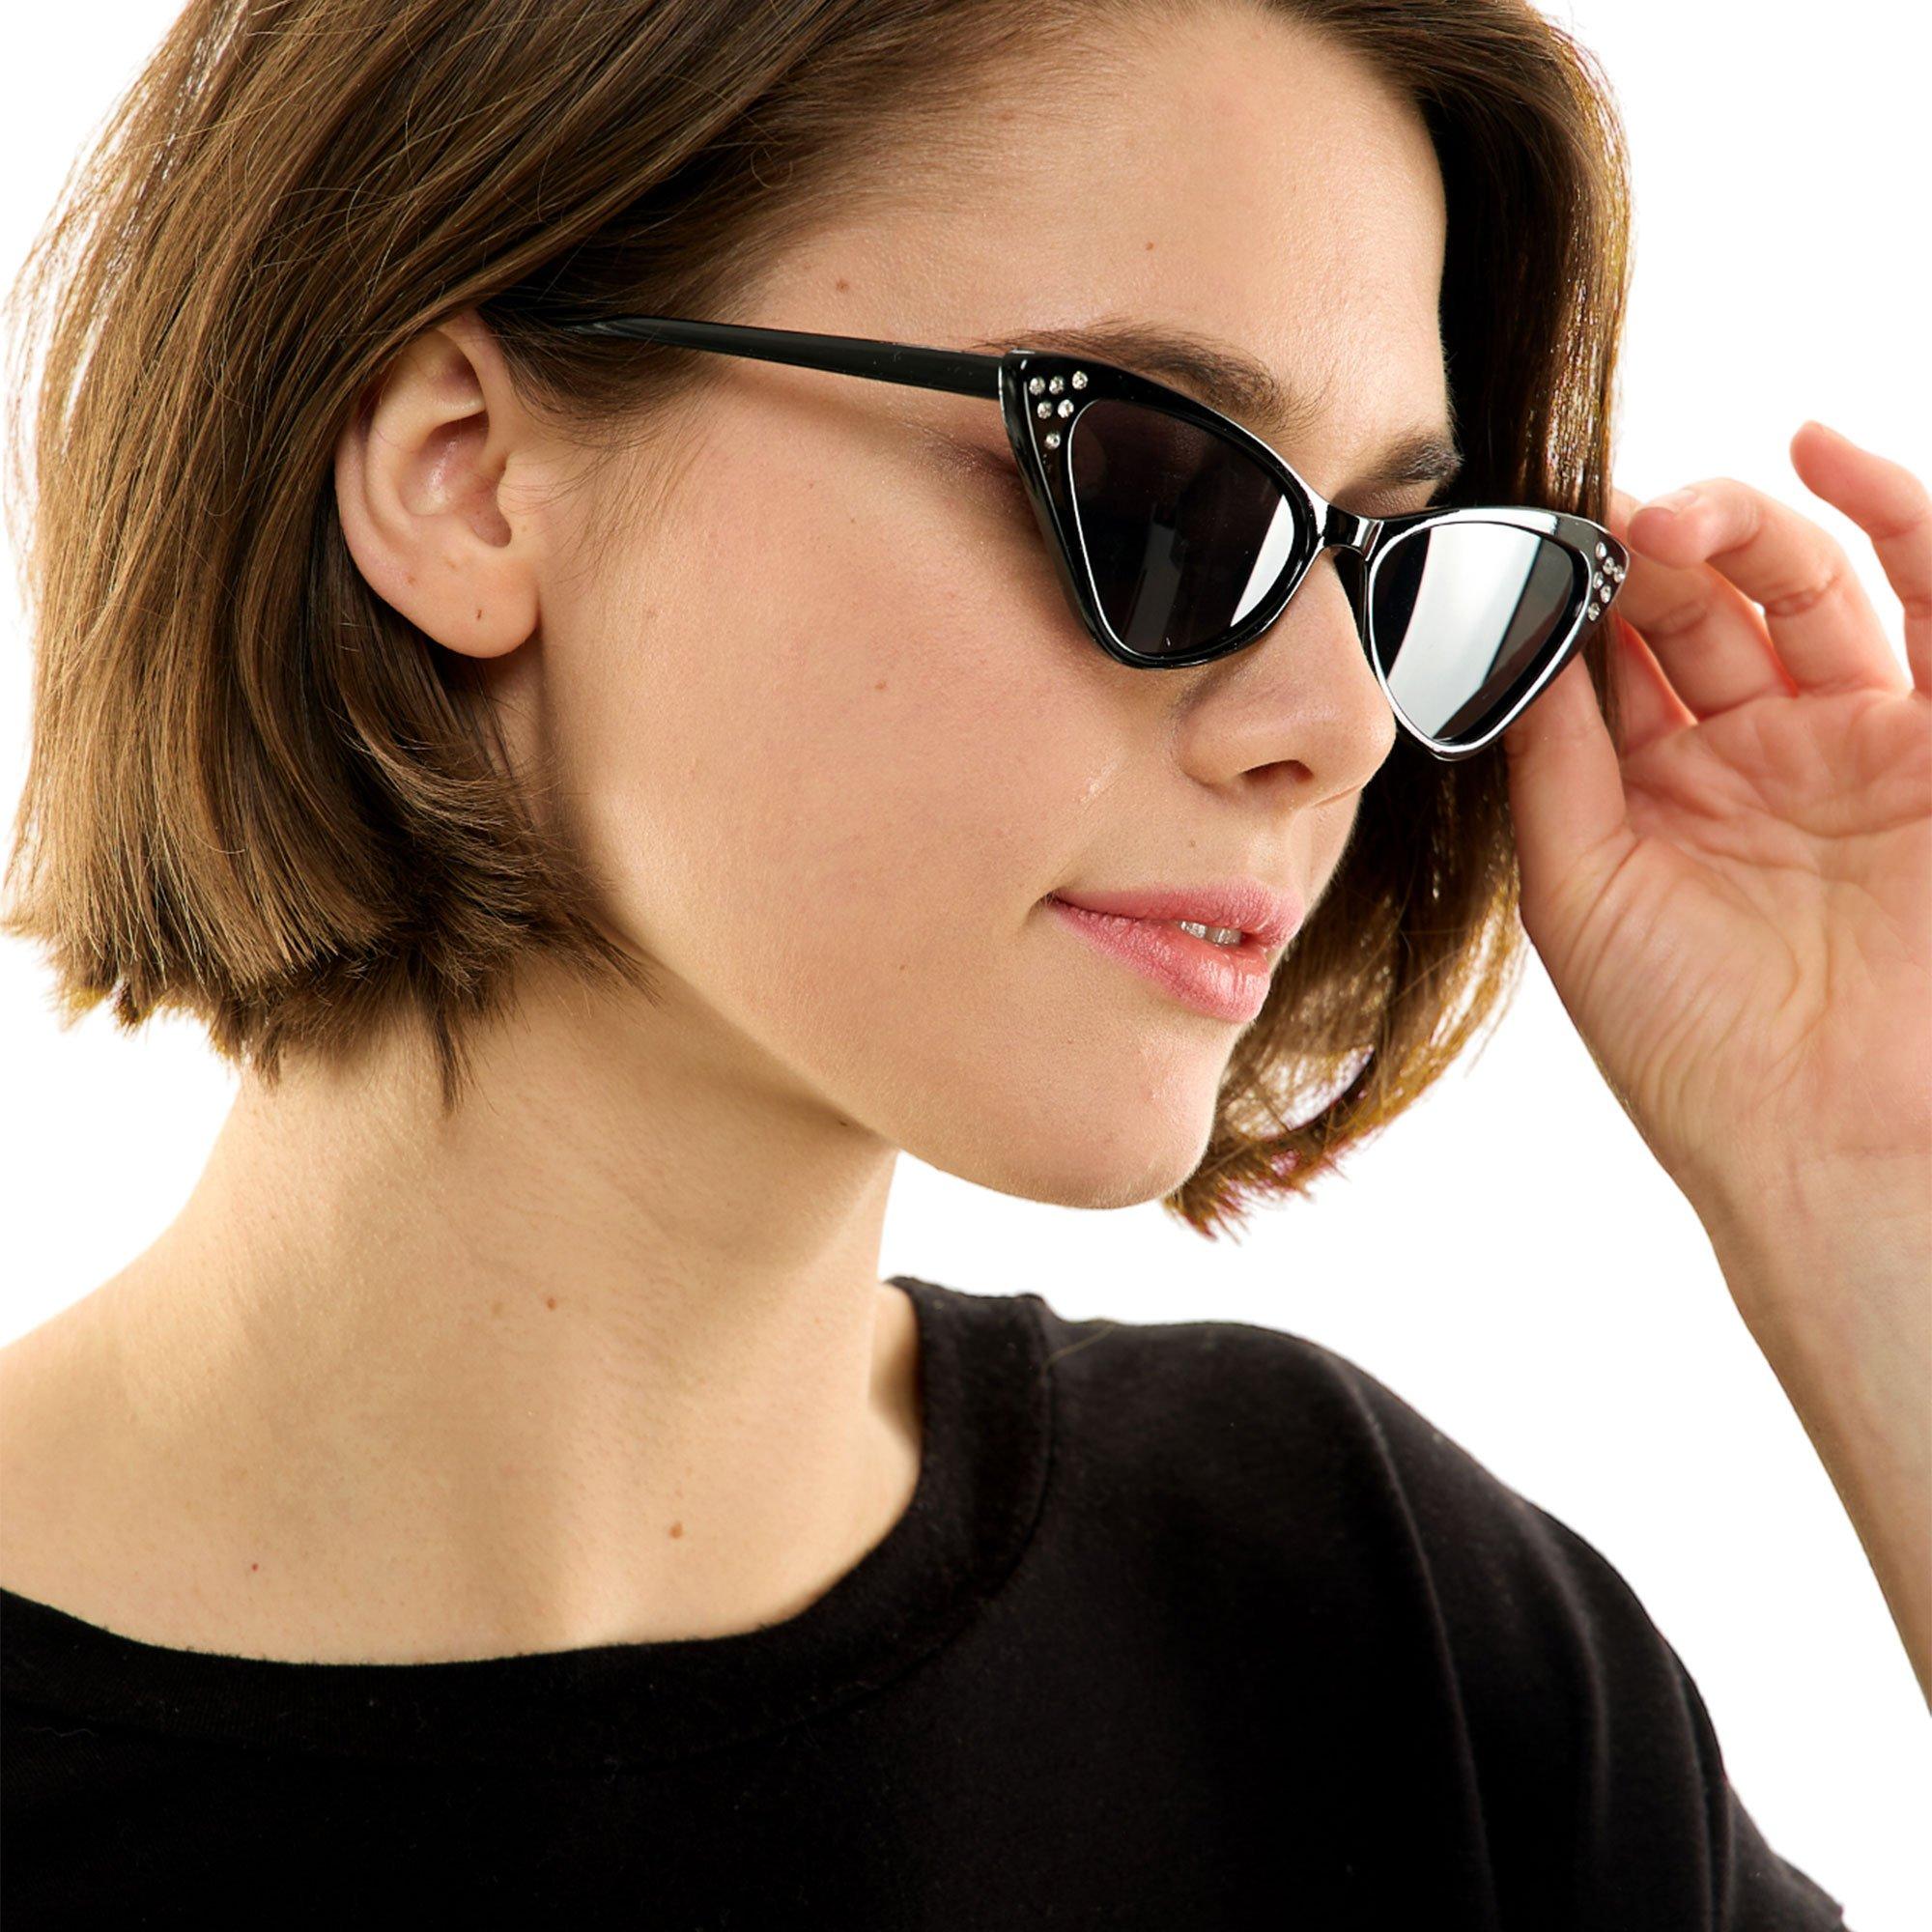 NEW QUAY Harper Matte Black/Smoke Fade Cat Eye Sunglasses Gradient Sunnies